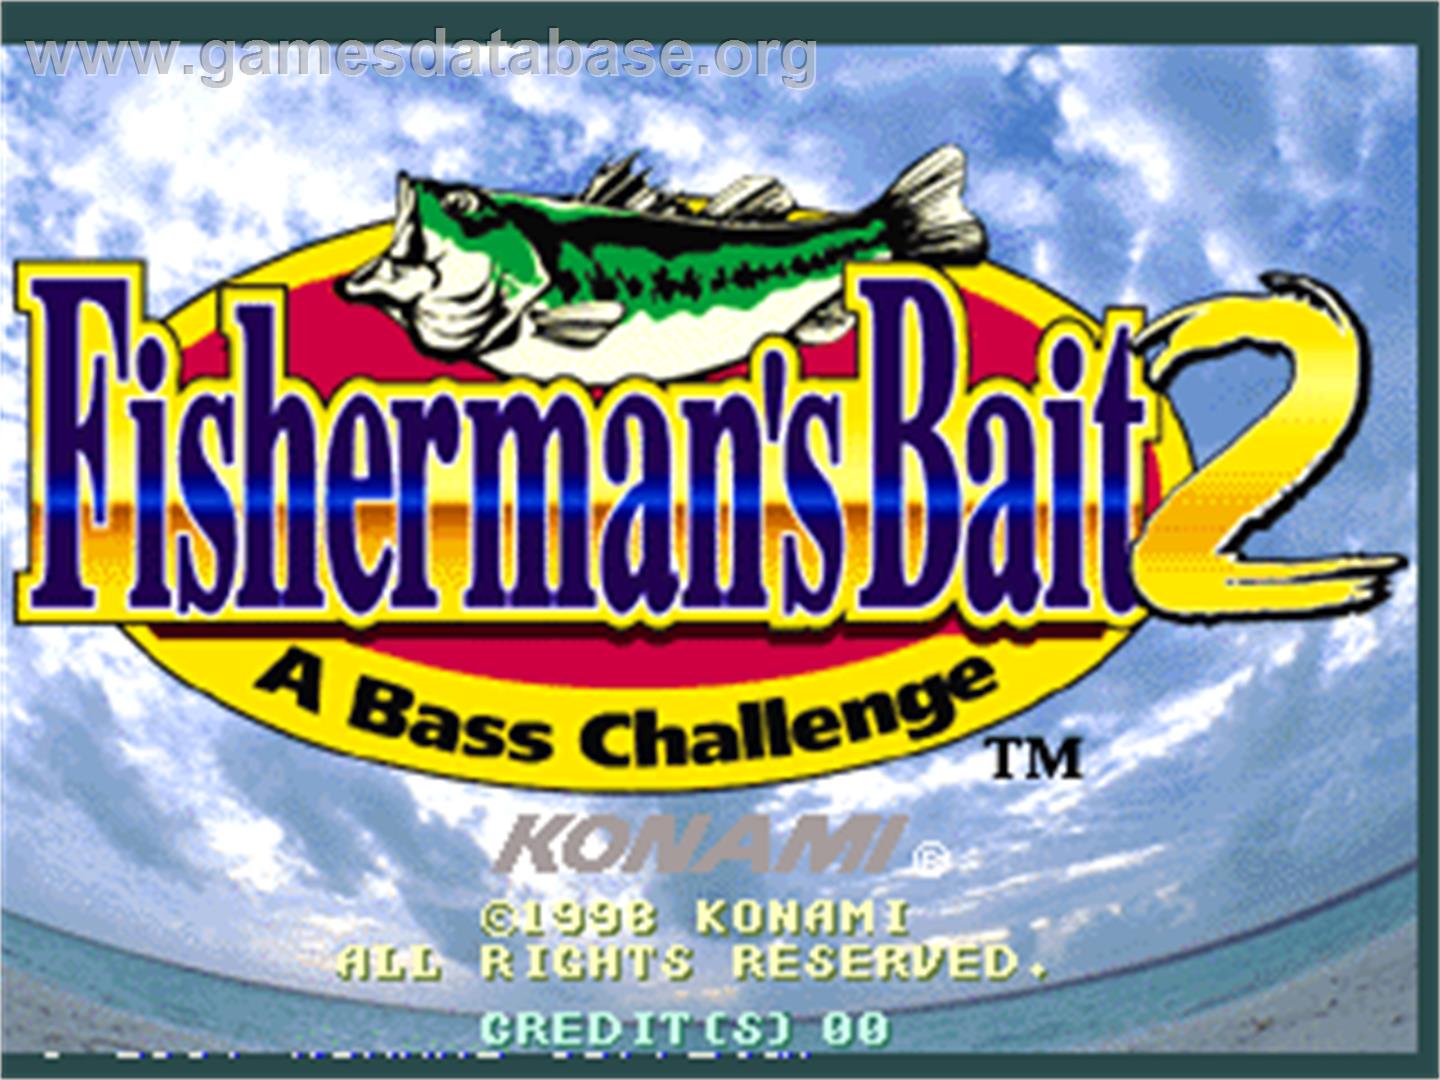 Fisherman's Bait 2 - A Bass Challenge - Arcade - Artwork - Title Screen